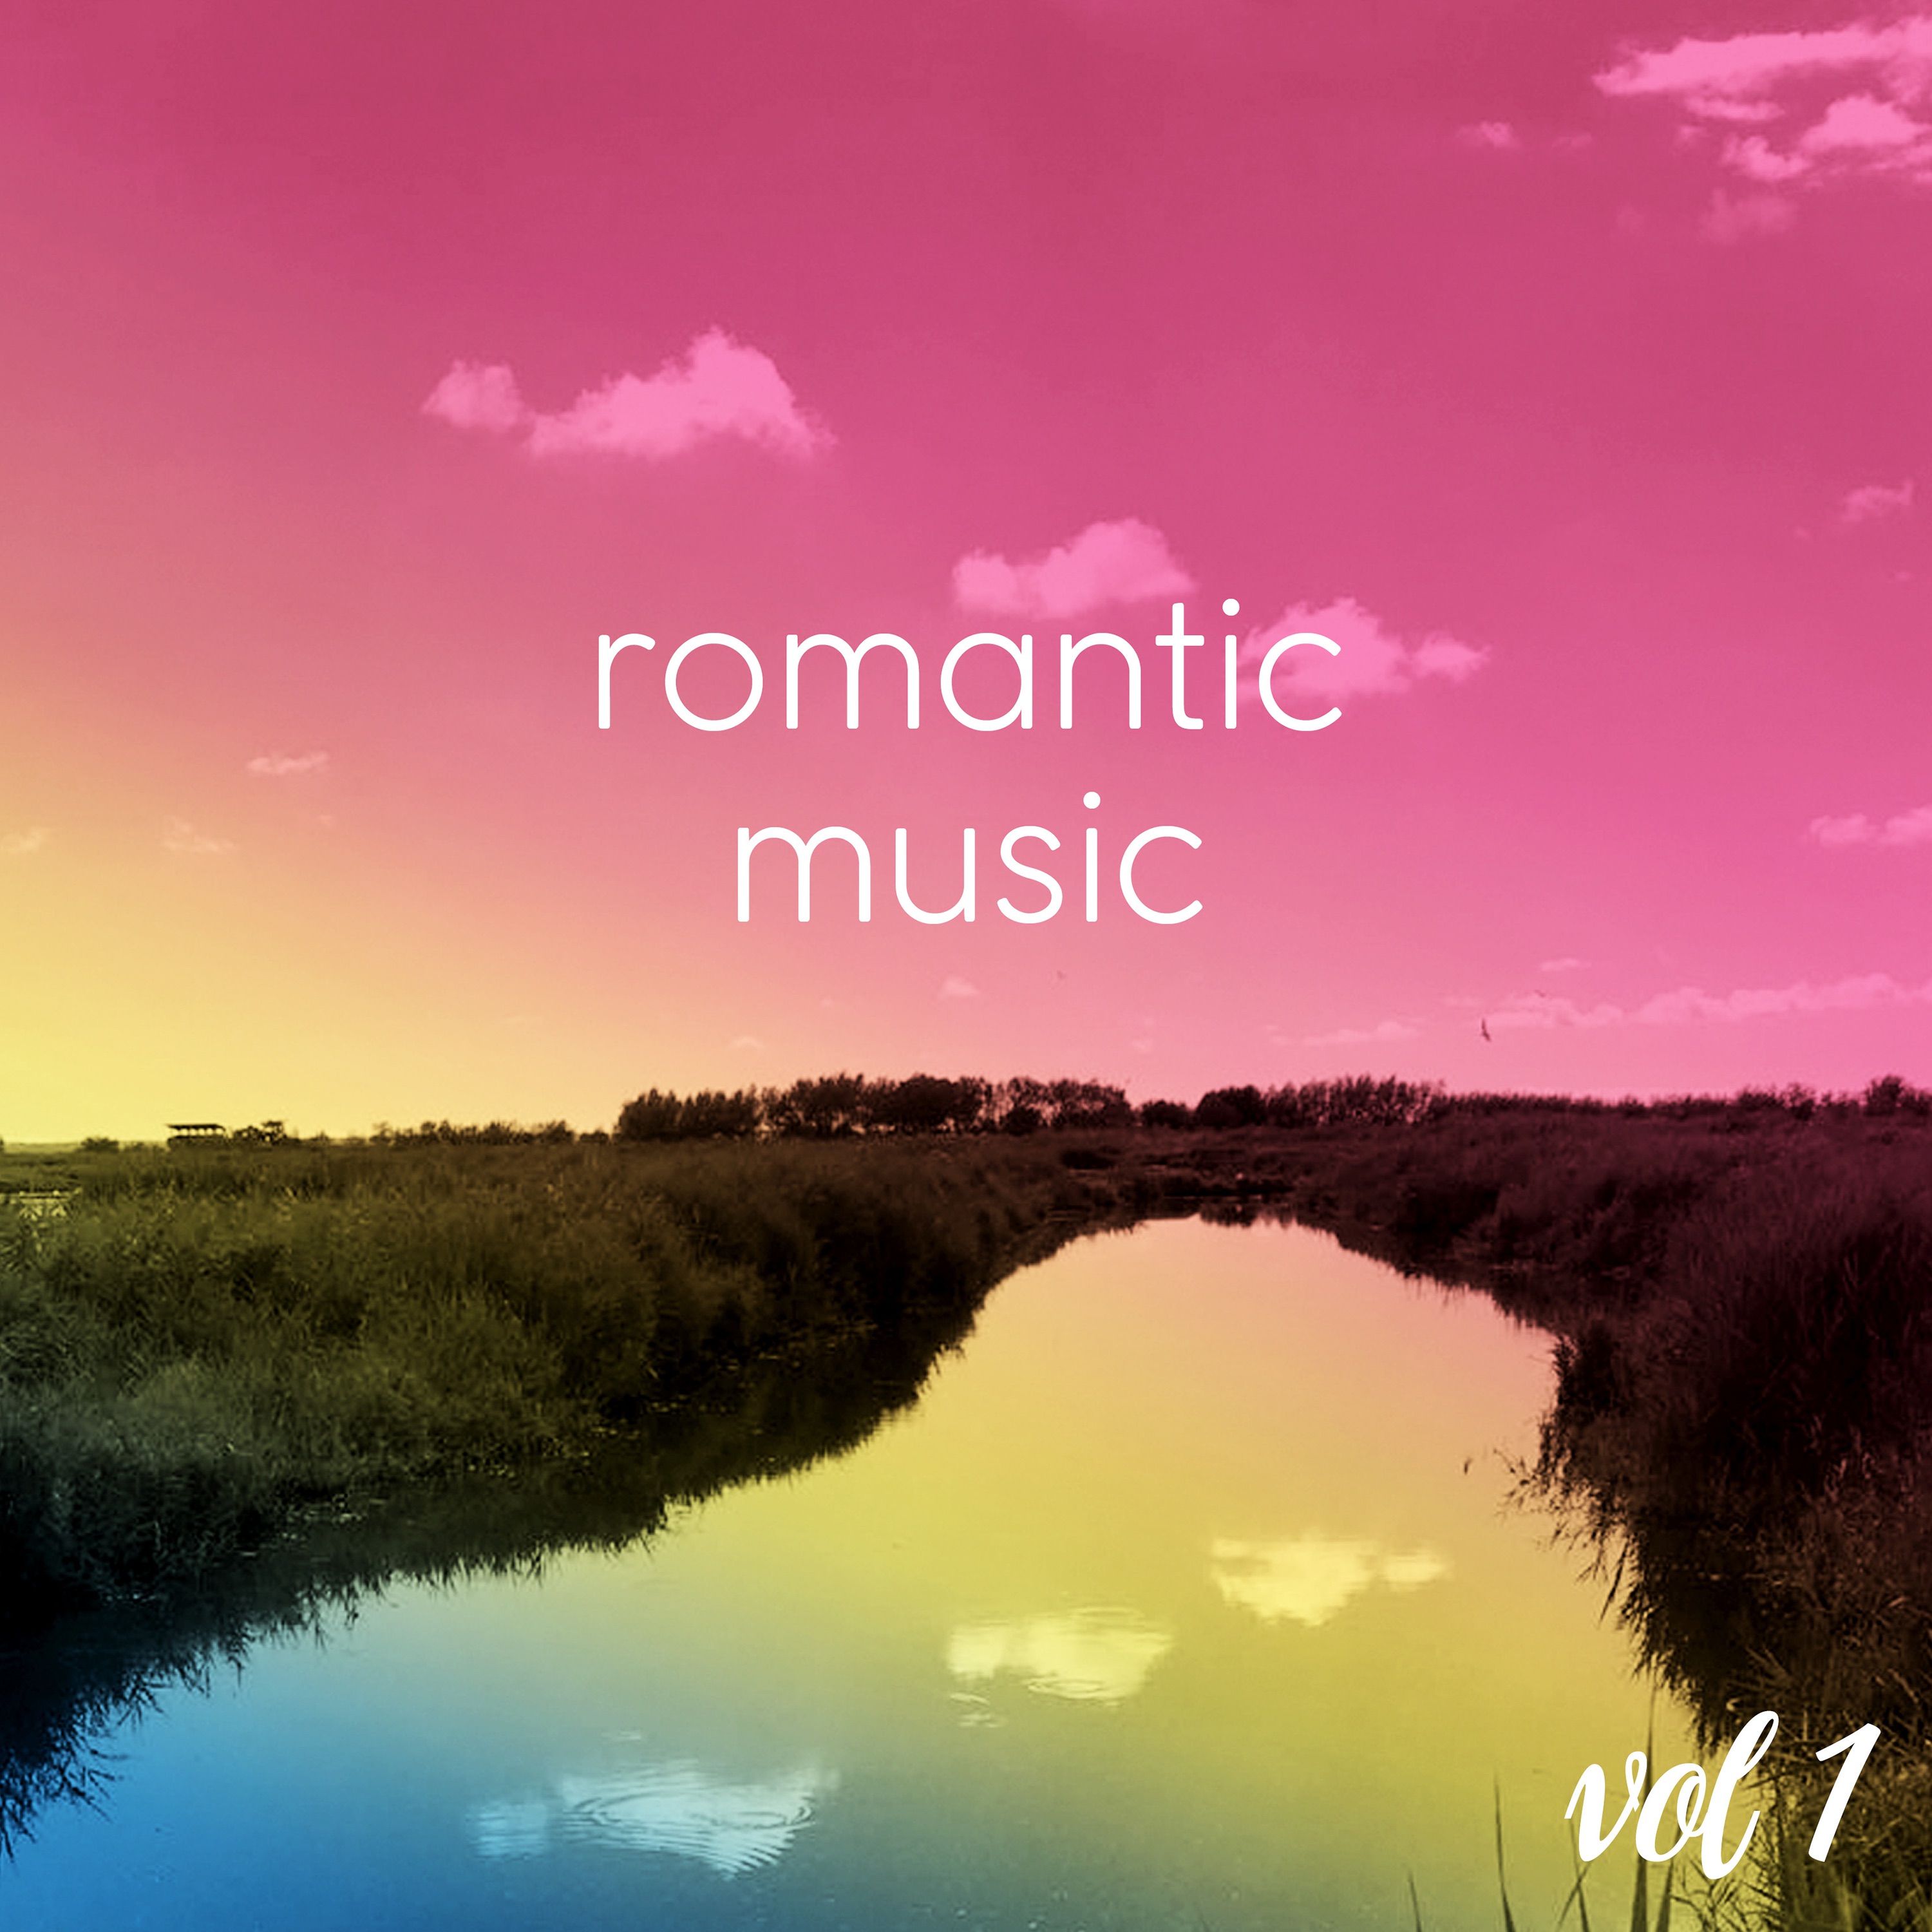 Романтик музыка онлайне. Romantic Music. Романтическая музыка обложки. Романтичная песня. Romanticism Music.